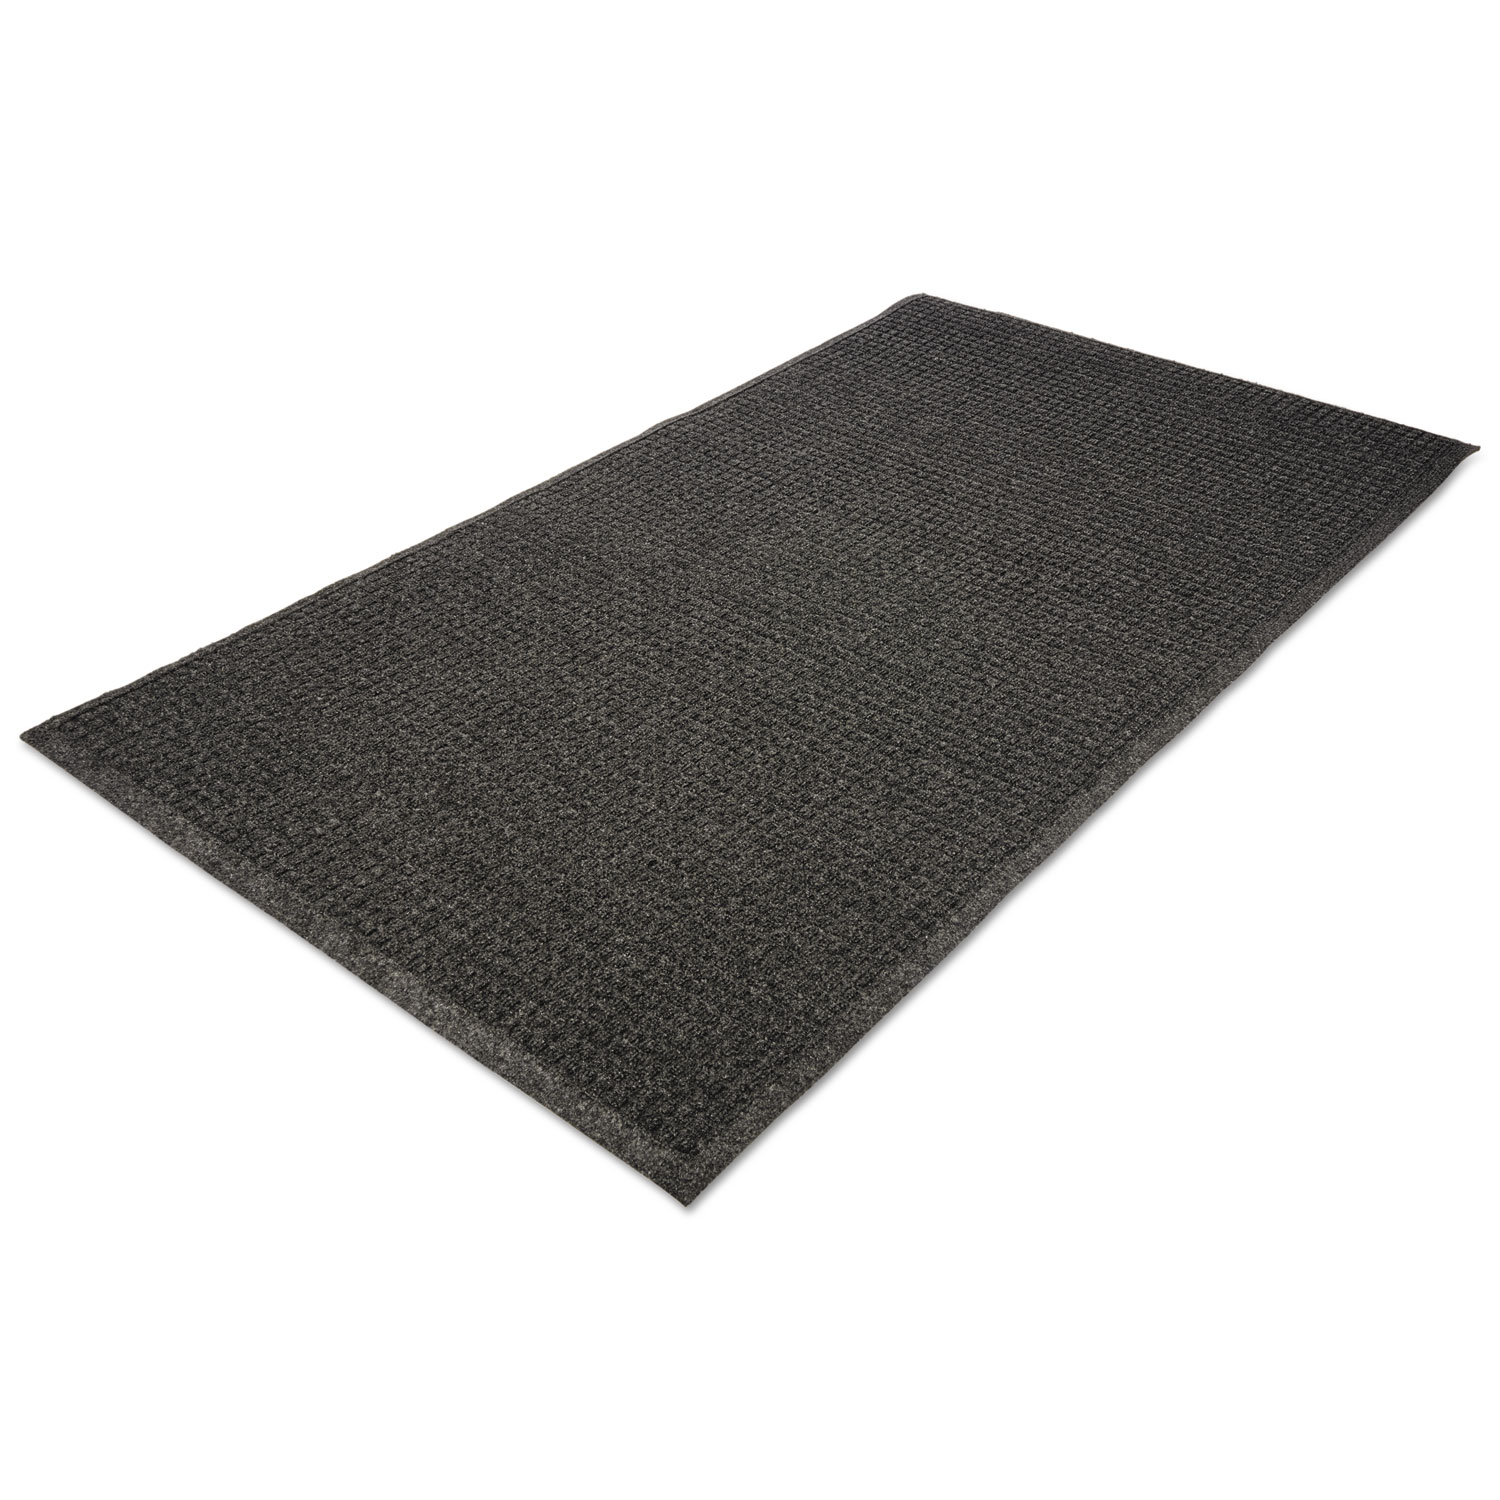  Guardian EG020304 EcoGuard Indoor/Outdoor Wiper Mat, Rubber, 24 x 36, Charcoal (MLLEG020304) 